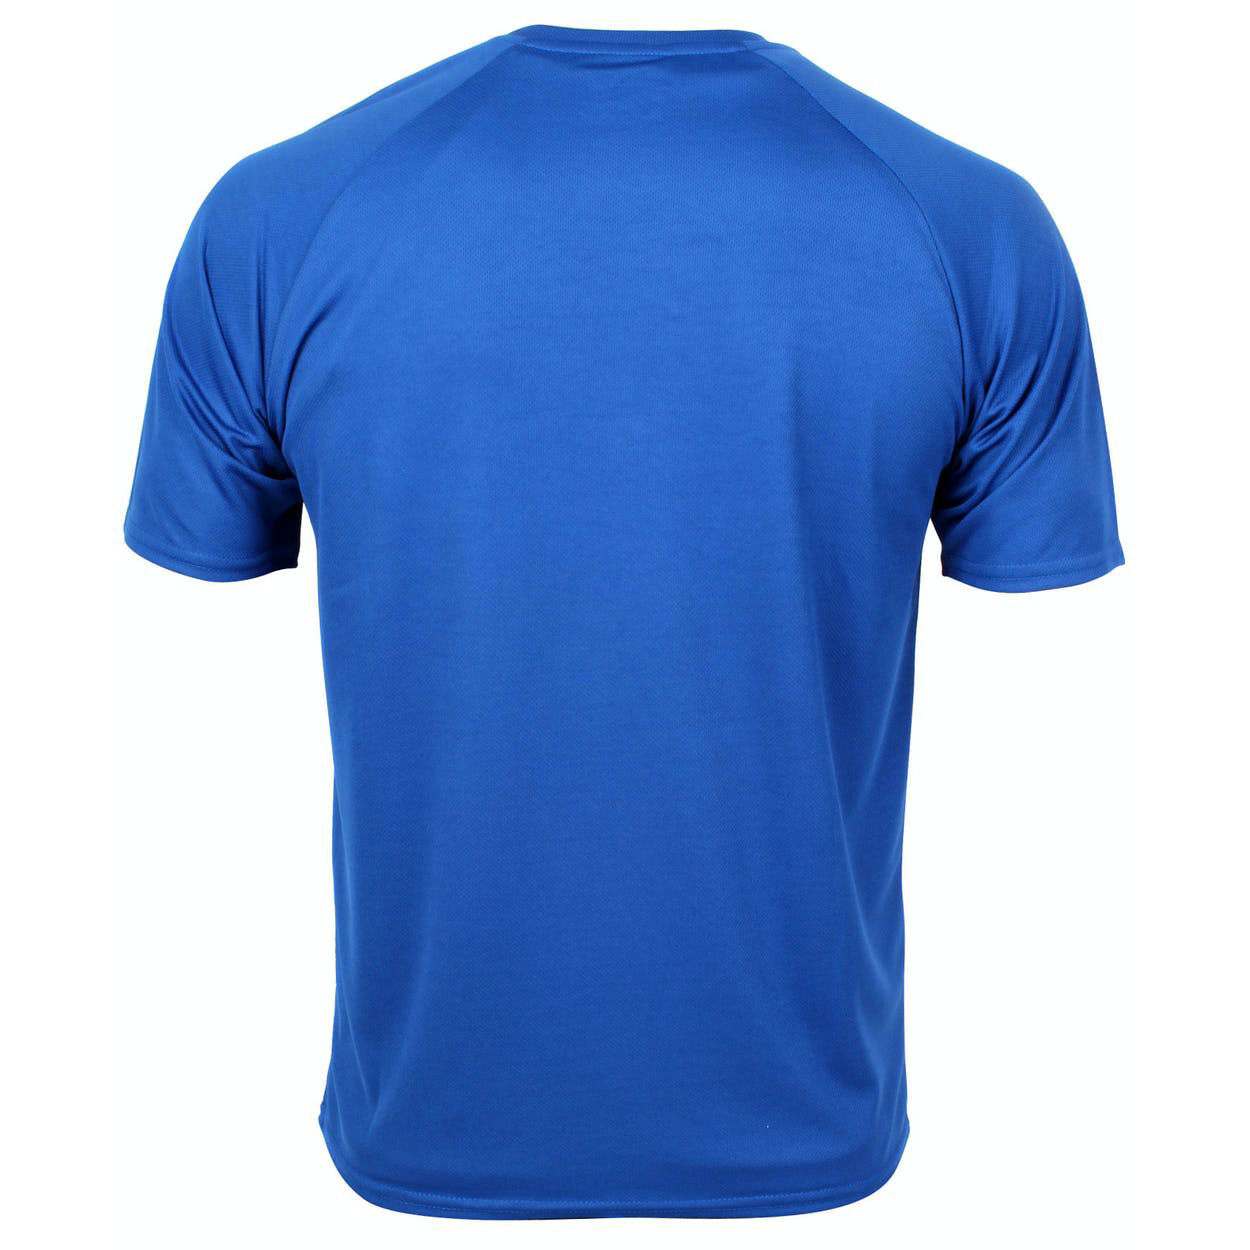 Gato Sports Tech T-shirt HERR - Blå